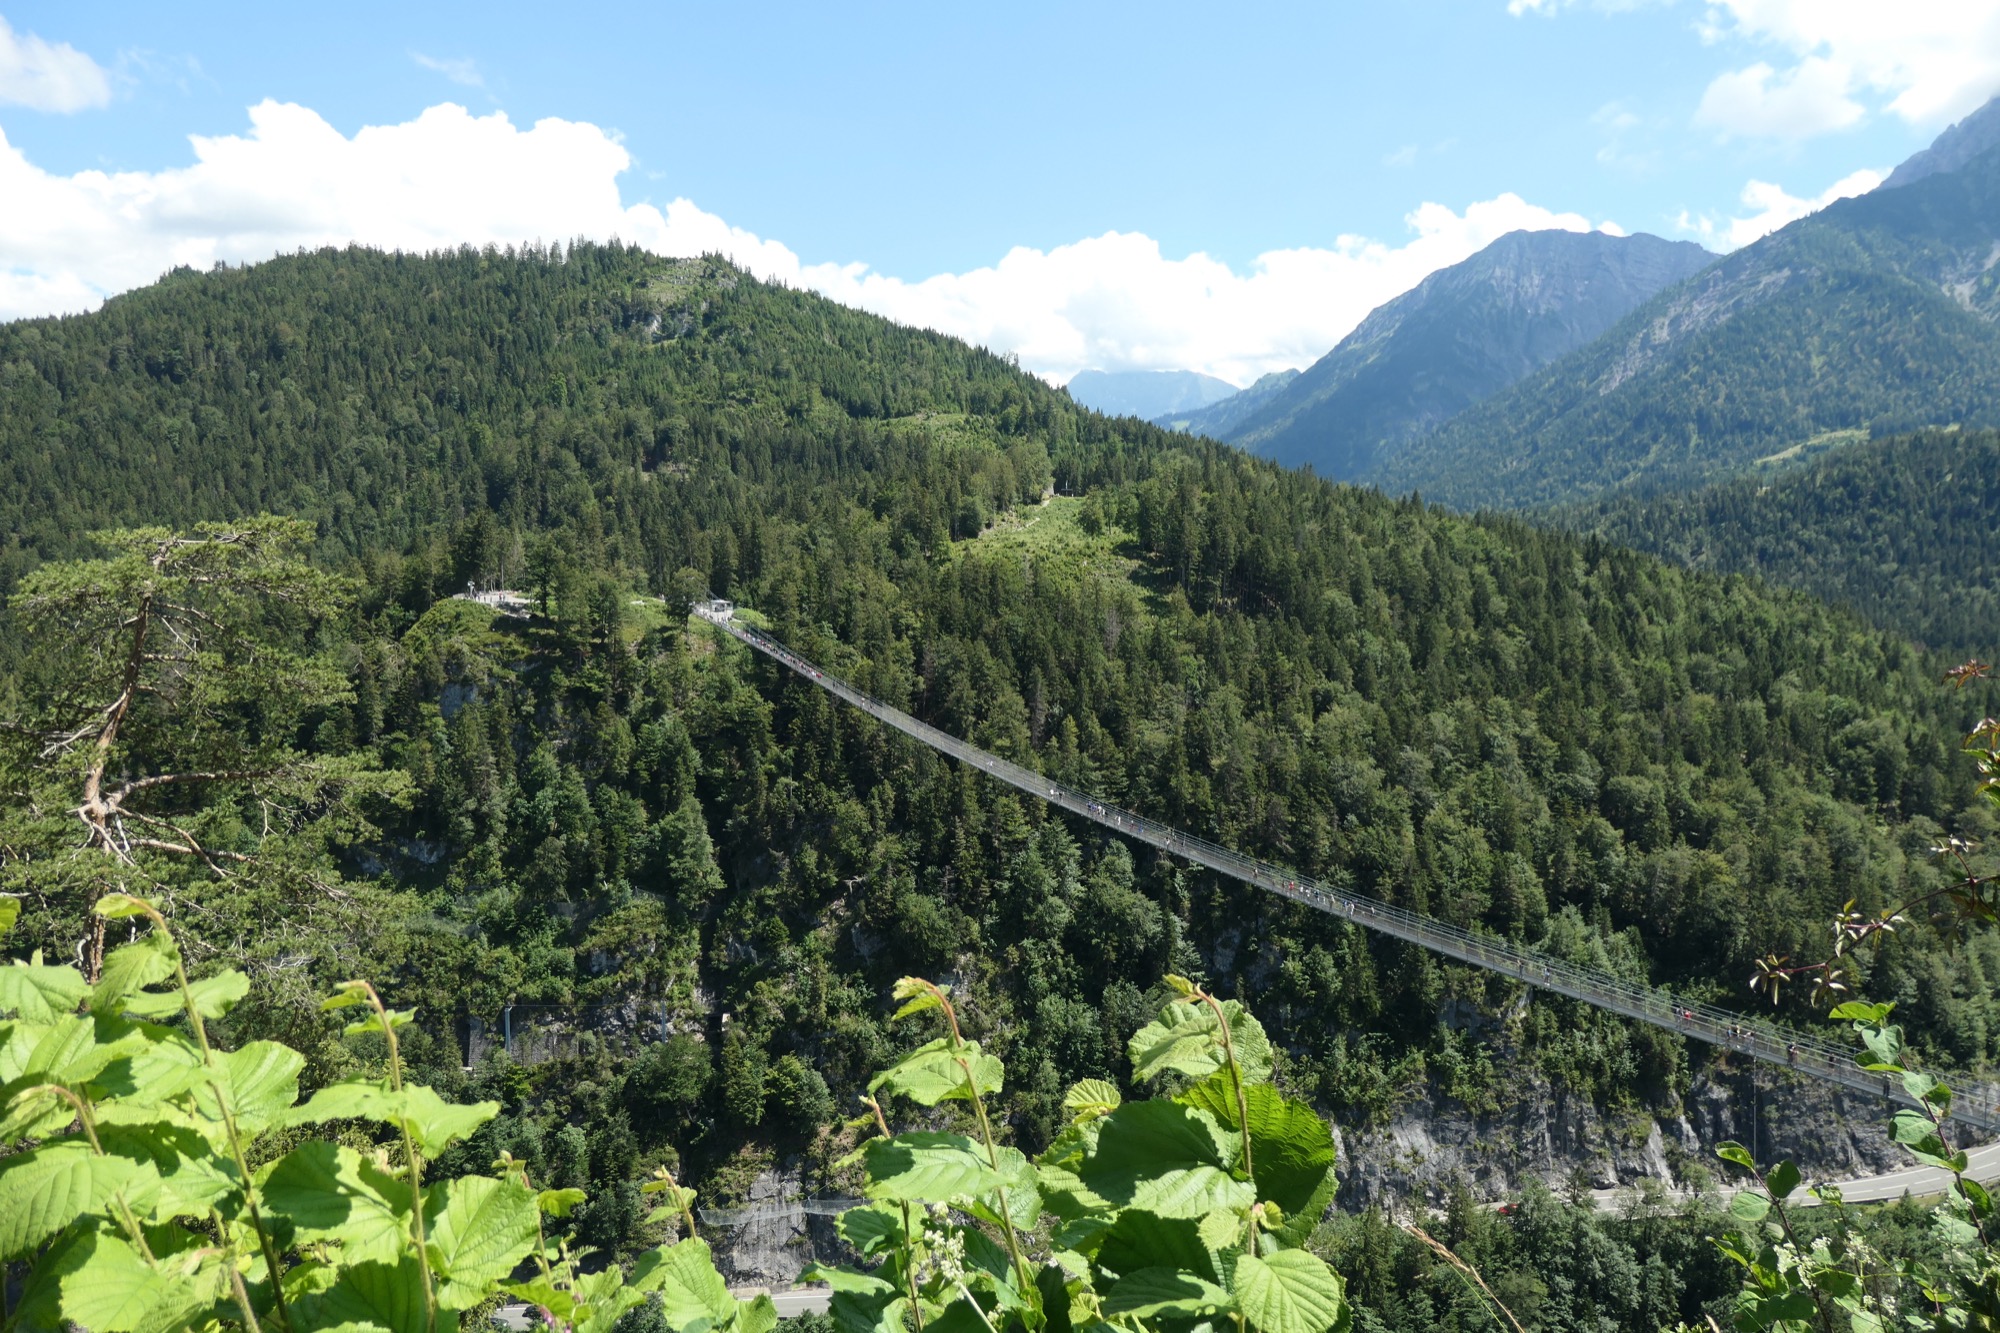 Highline 179: The world's longest pedestrian suspension bridge.